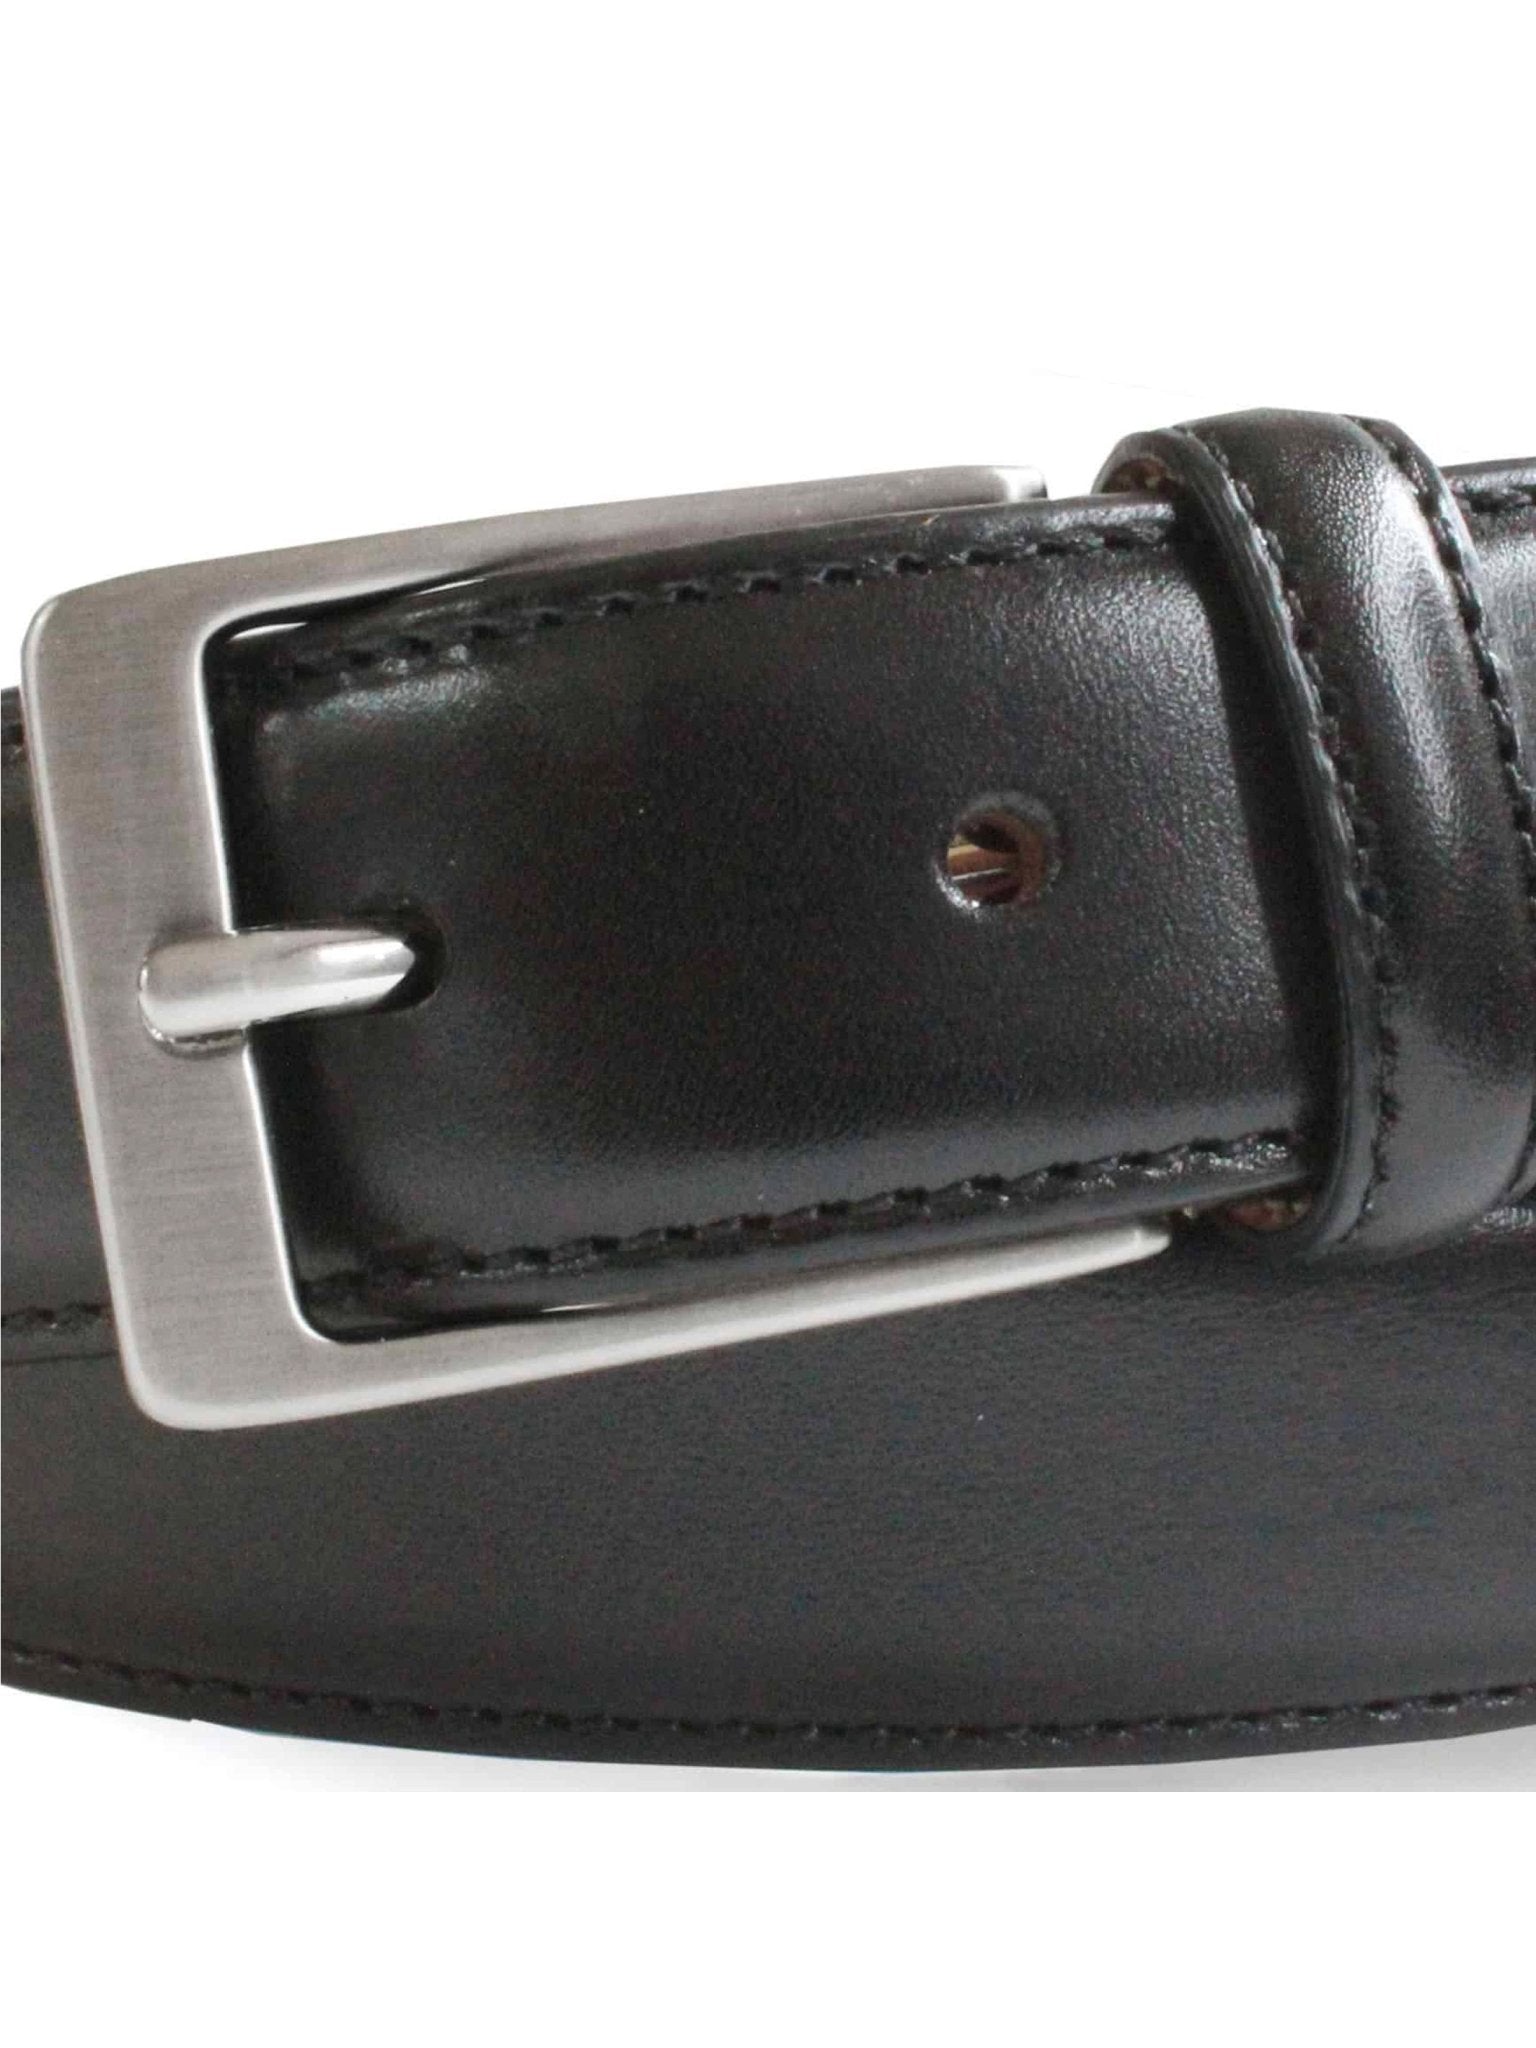 4elementsclothingRobert CharlesRobert Charles Belts - 3751 Calfskin Leather Mens belt - 35mm leather width - Made in ItalyBelts3751/BLACK/S